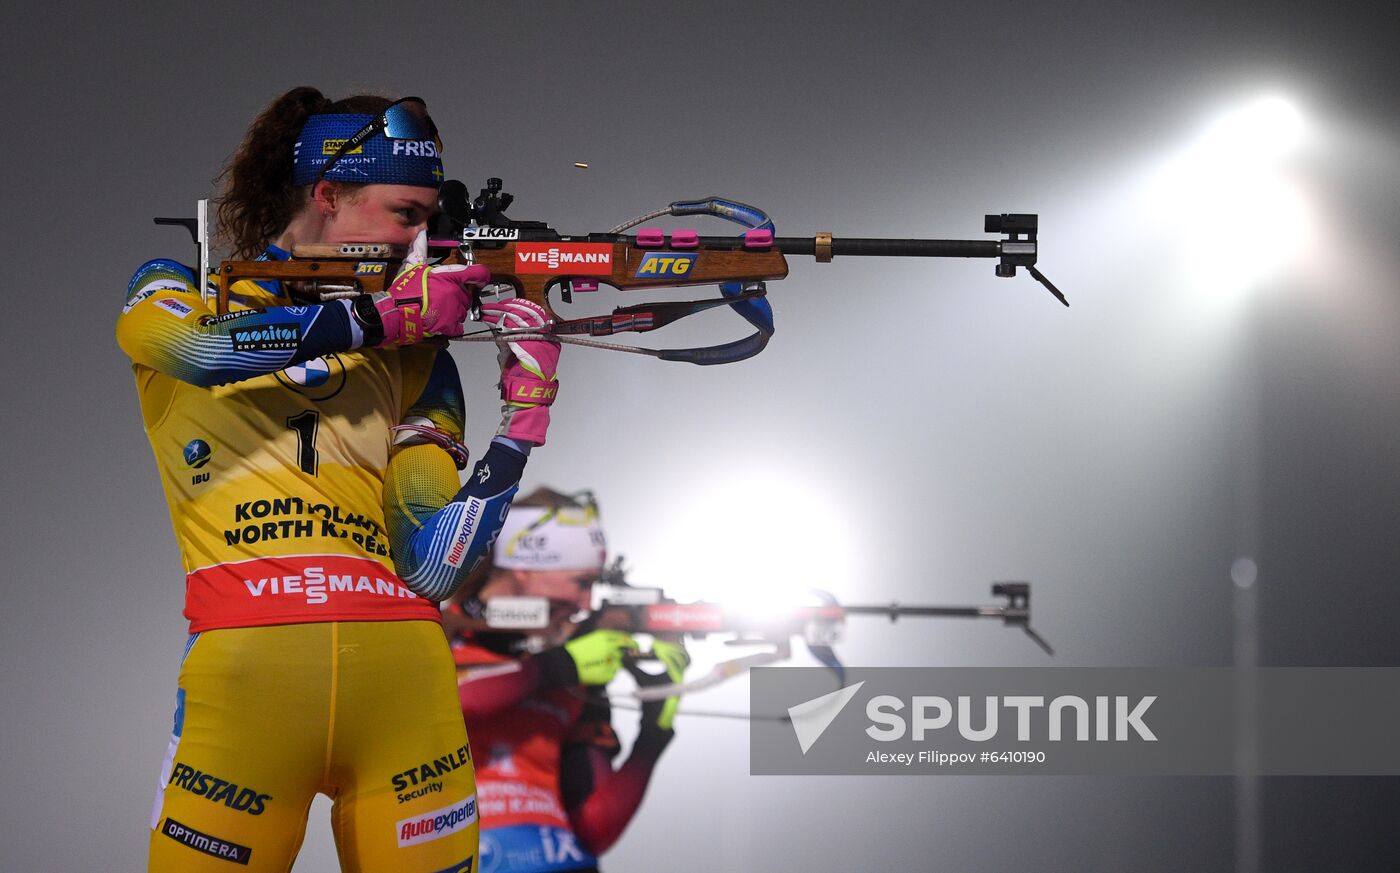 Finland Biathlon World Cup Women Pursuit